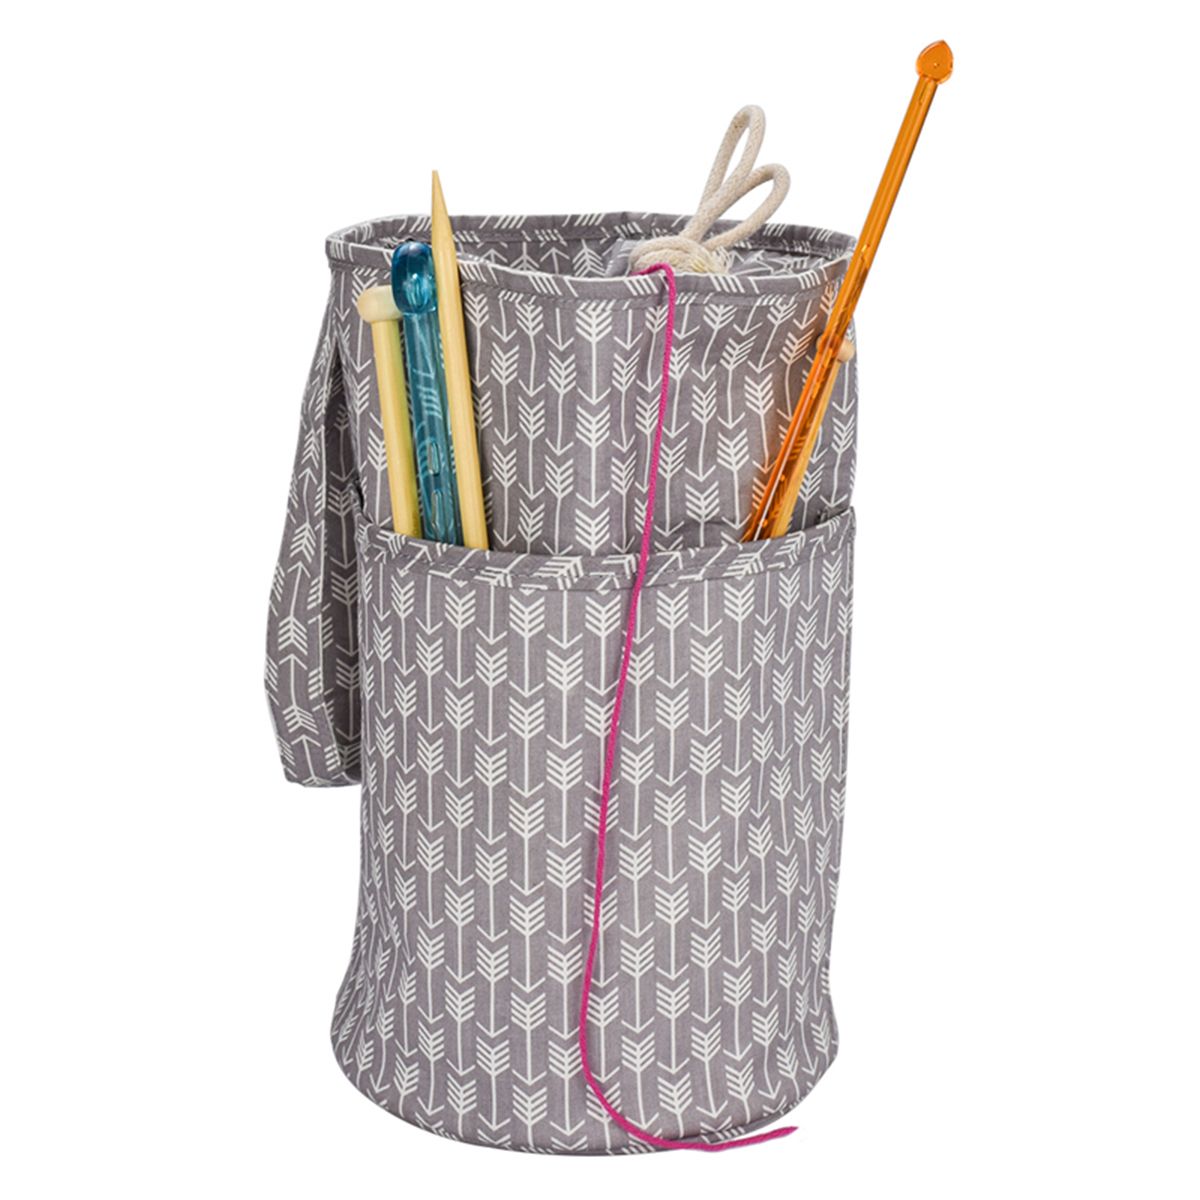 Bakeey-Crochet-Hook-Woolen-Yarn-Storage-Bag-Organizer-For-Knitting-Round-Rectangular-1589990